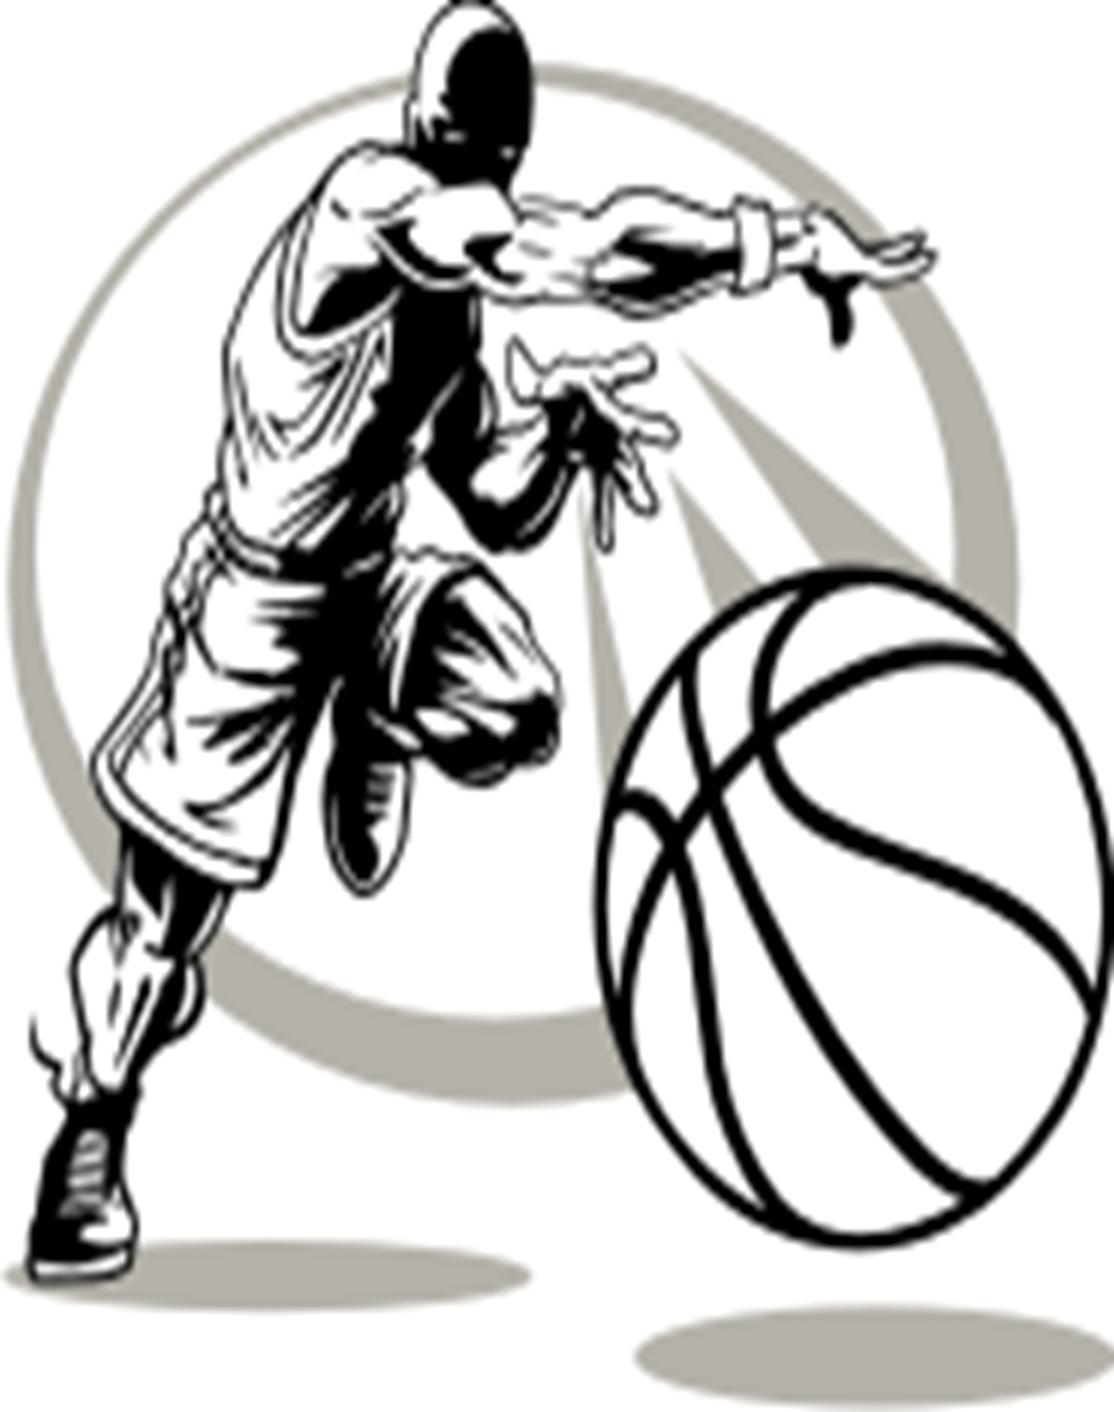 Basketball clipart free vector